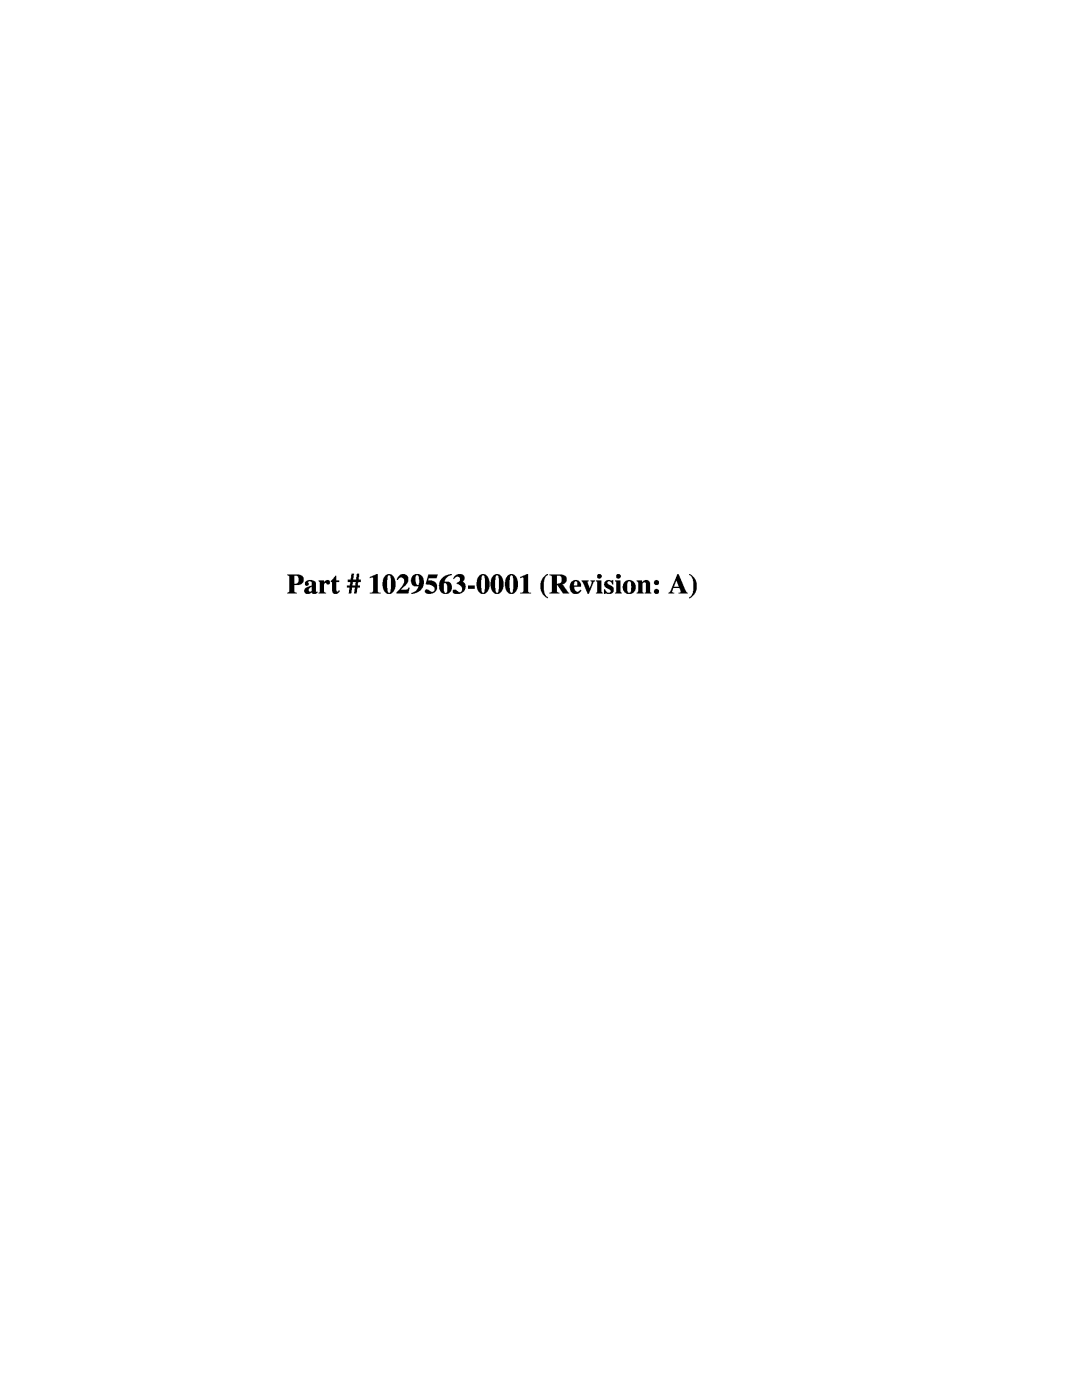 DirecTV HIRD-E86 manual Part # 1029563-0001Revision: A 